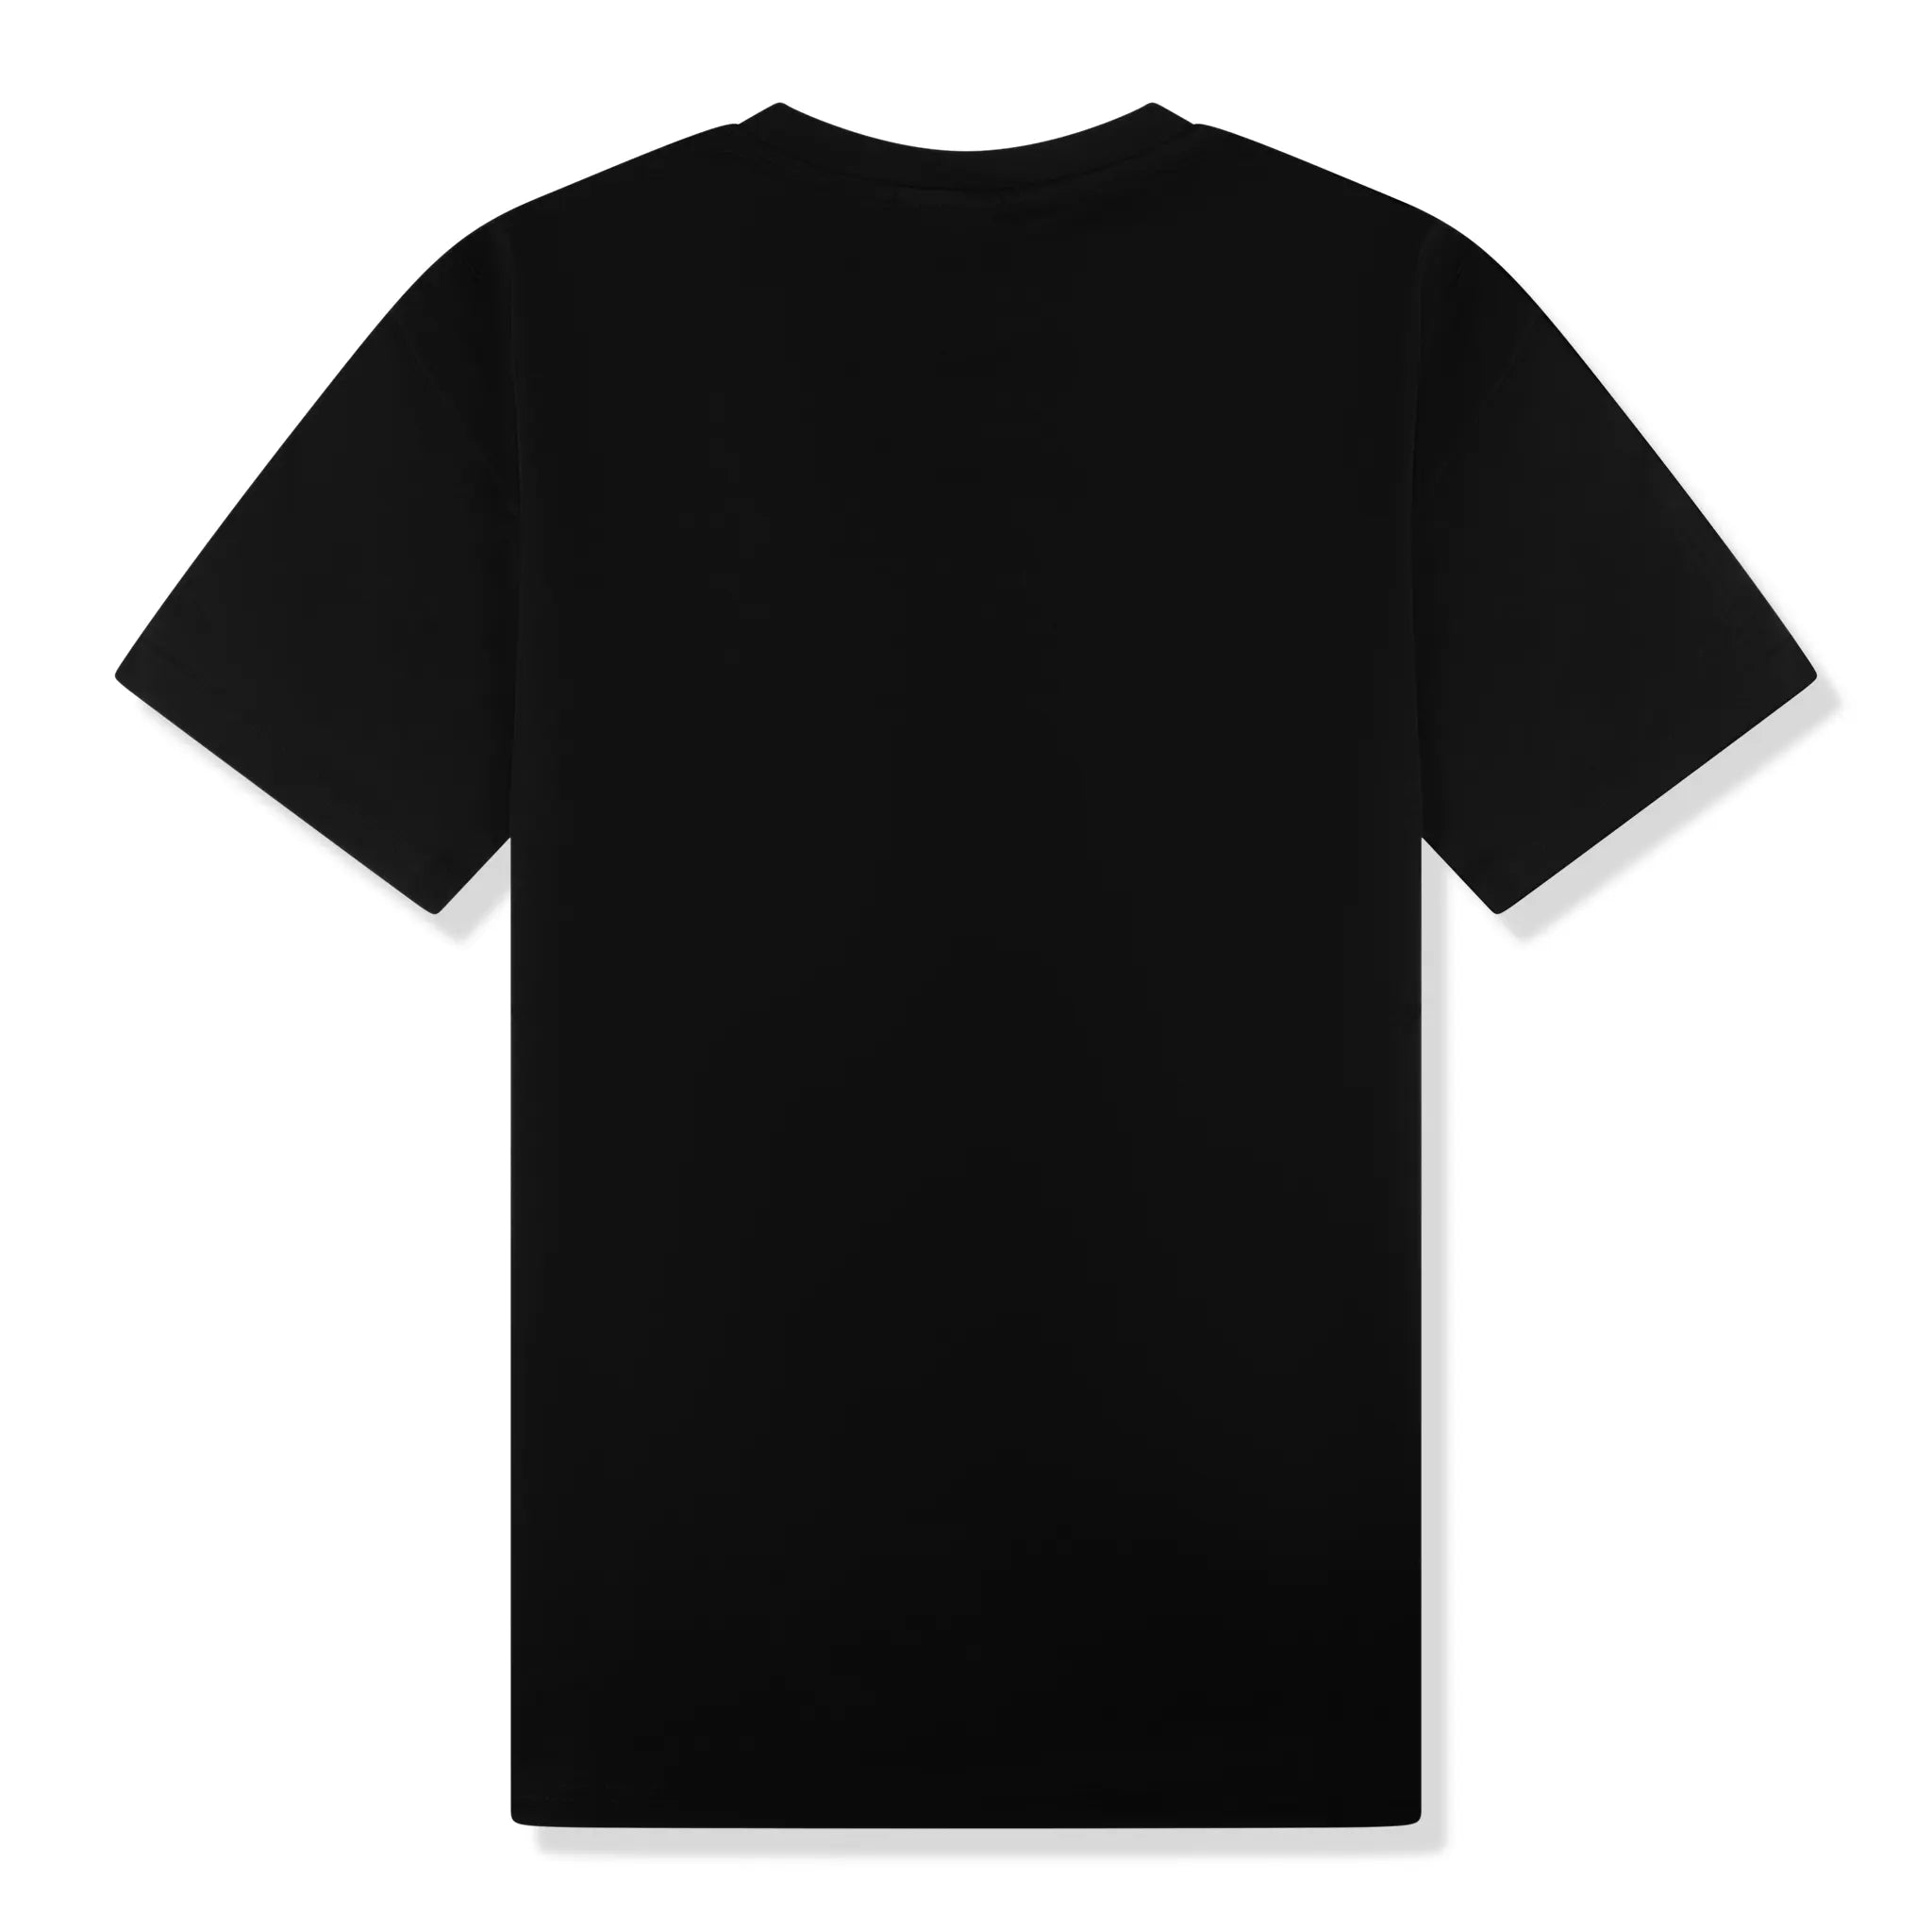 Back view of Belier Illusion Print Black Monochrome Pocket T Shirt BM-169